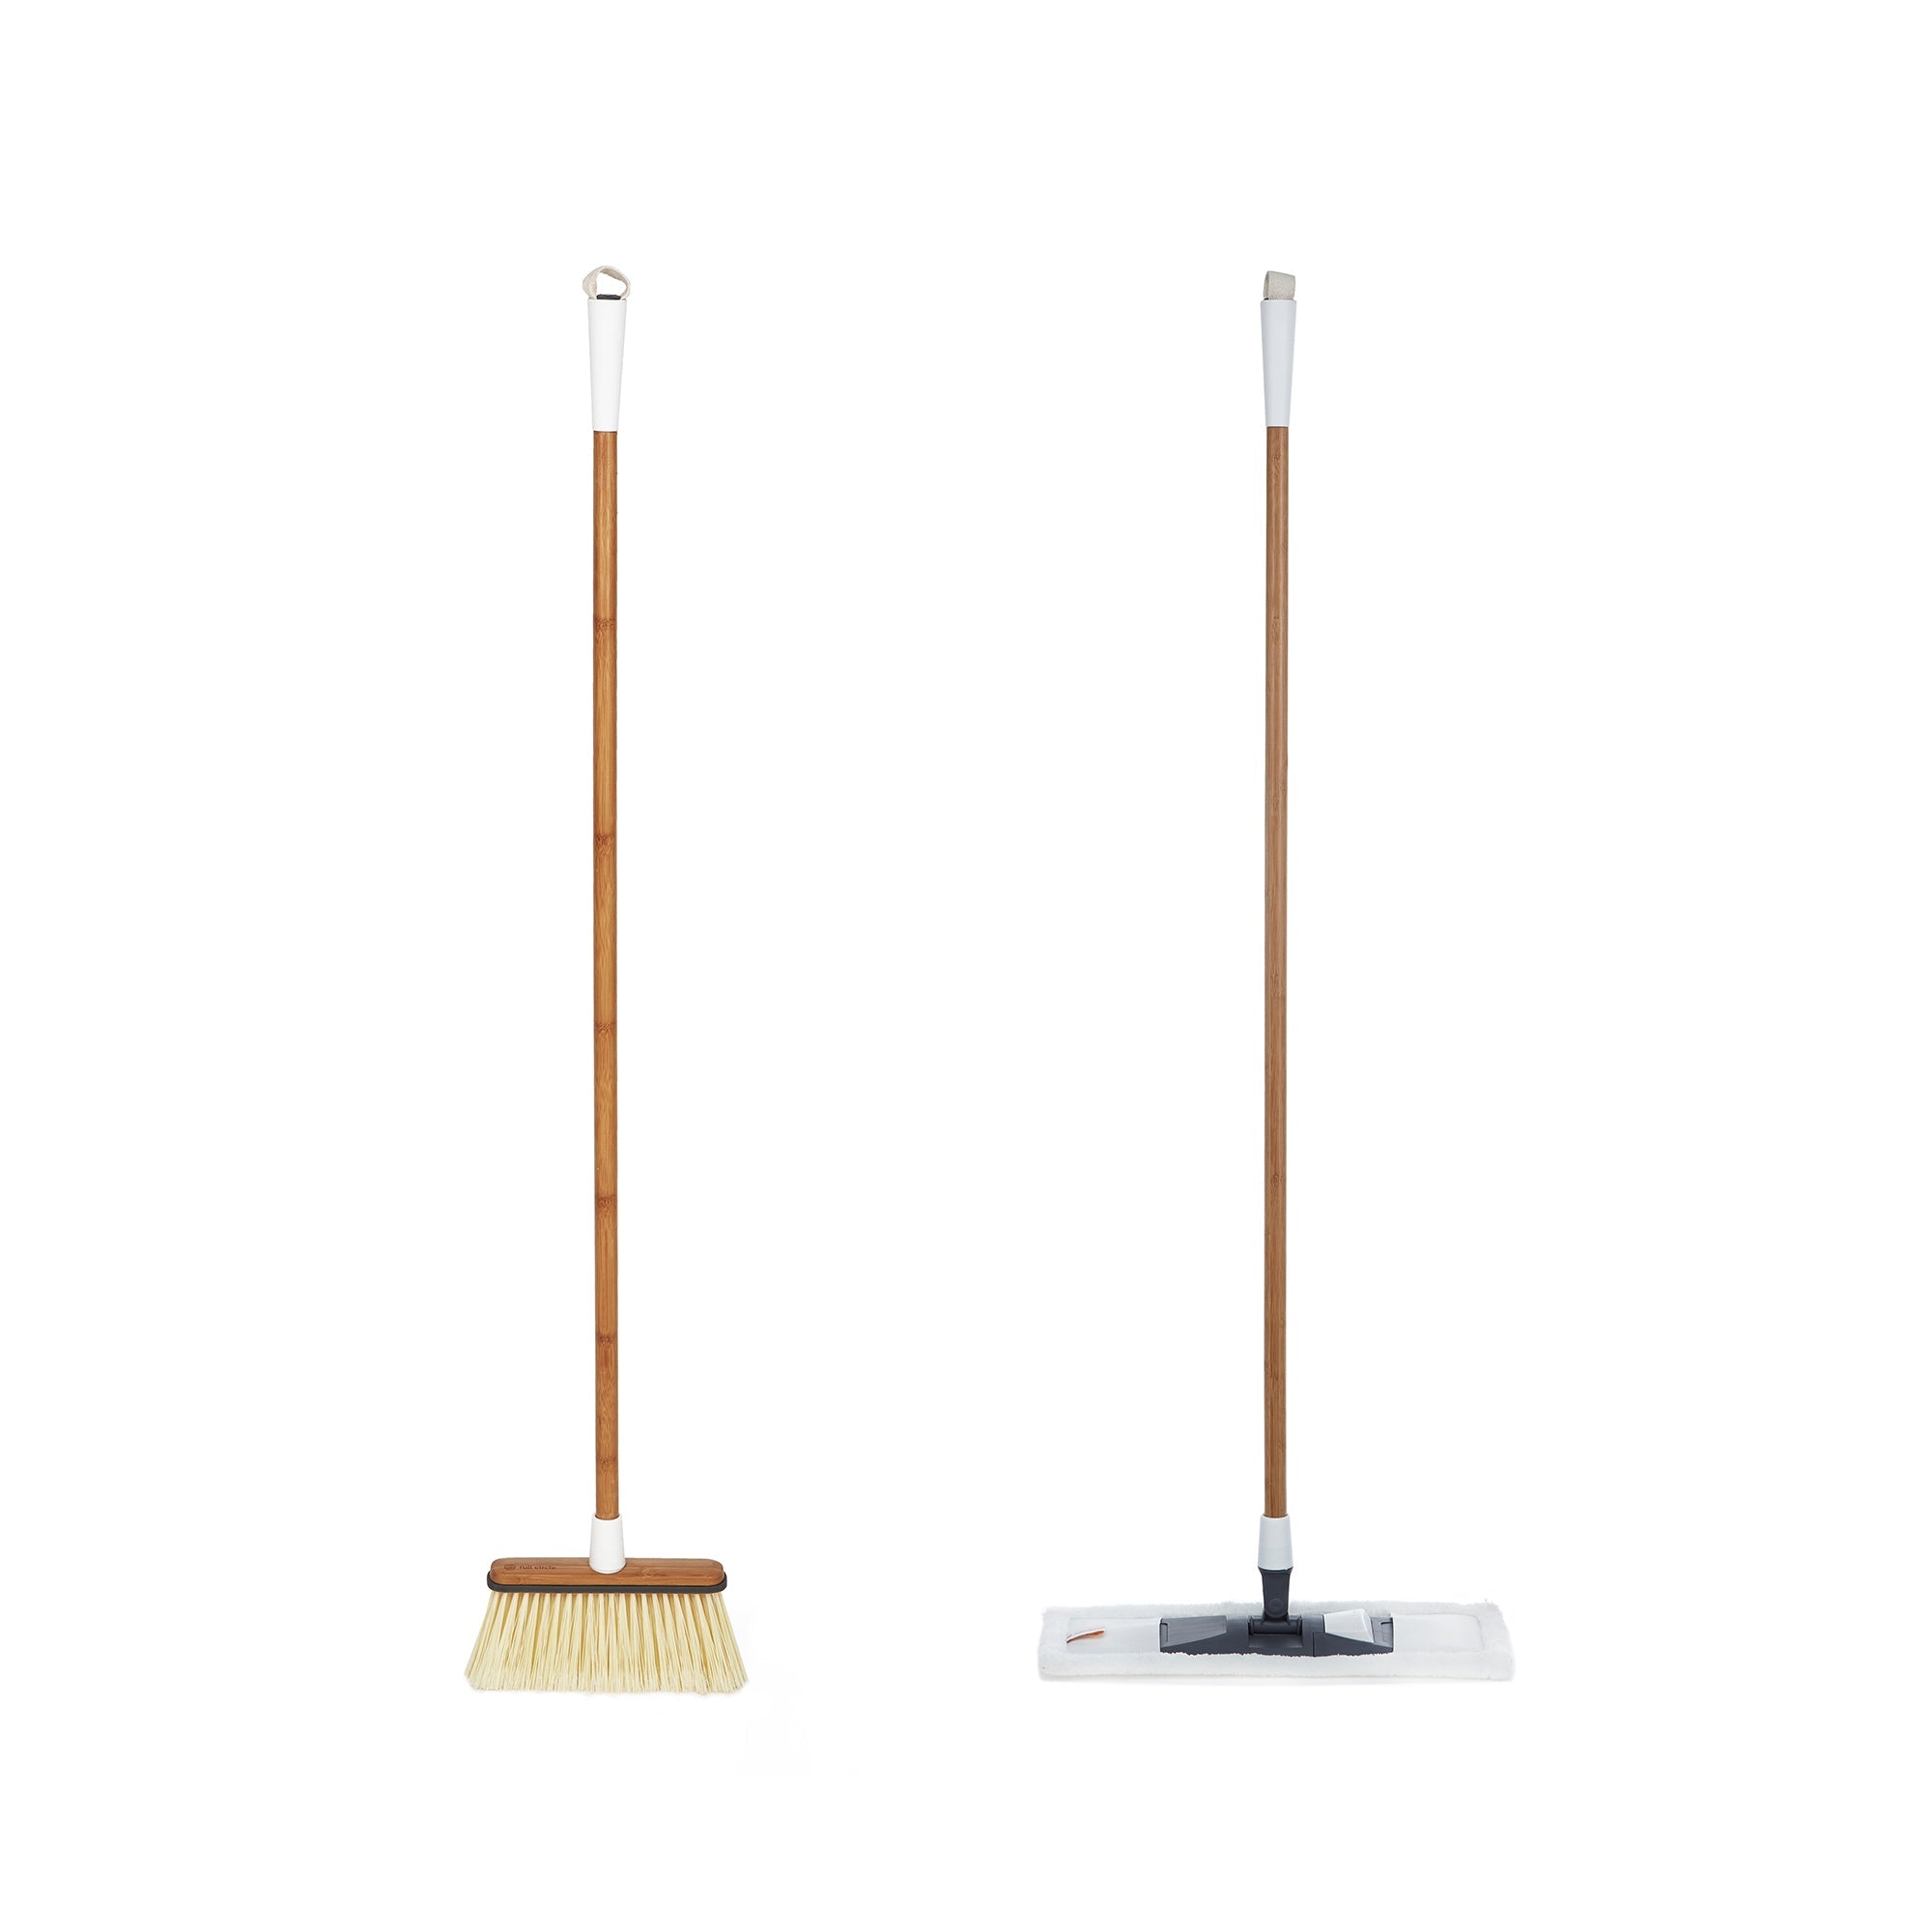 2-in-1 Wet/Dry Microfiber Mop and Broom Set